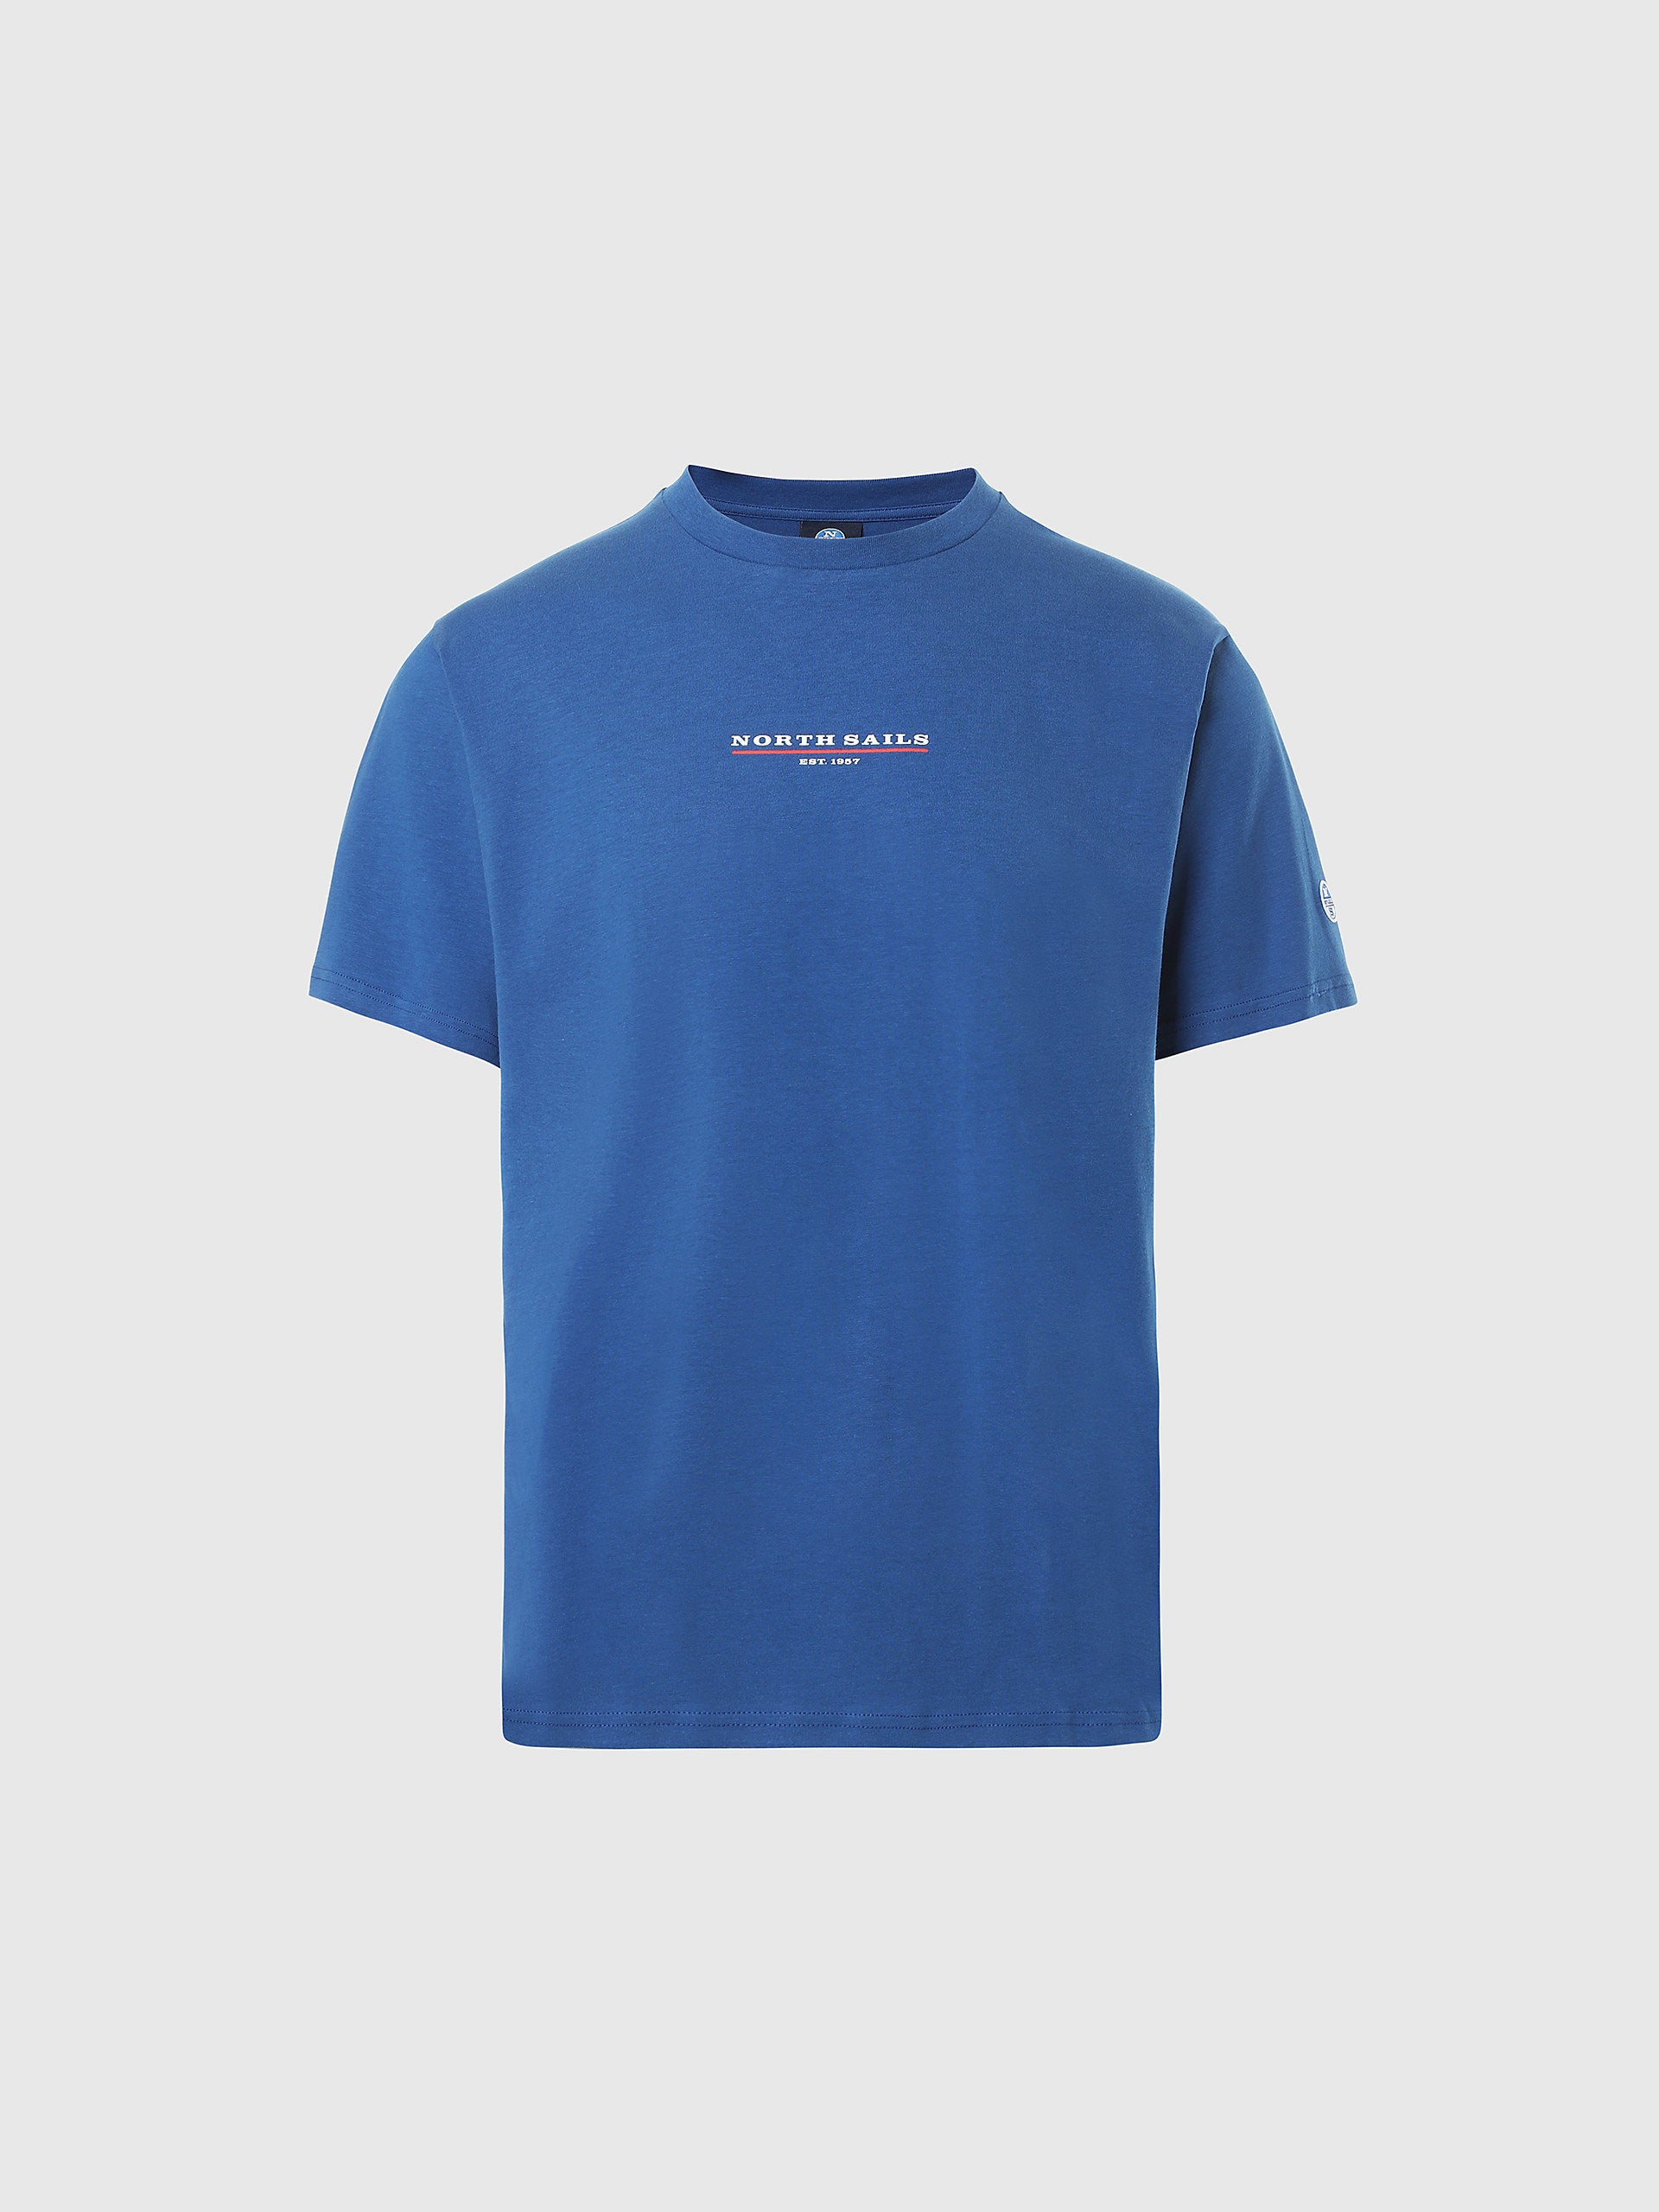 North Sails - T-shirt with chest printNorth SailsOcean blue3XL